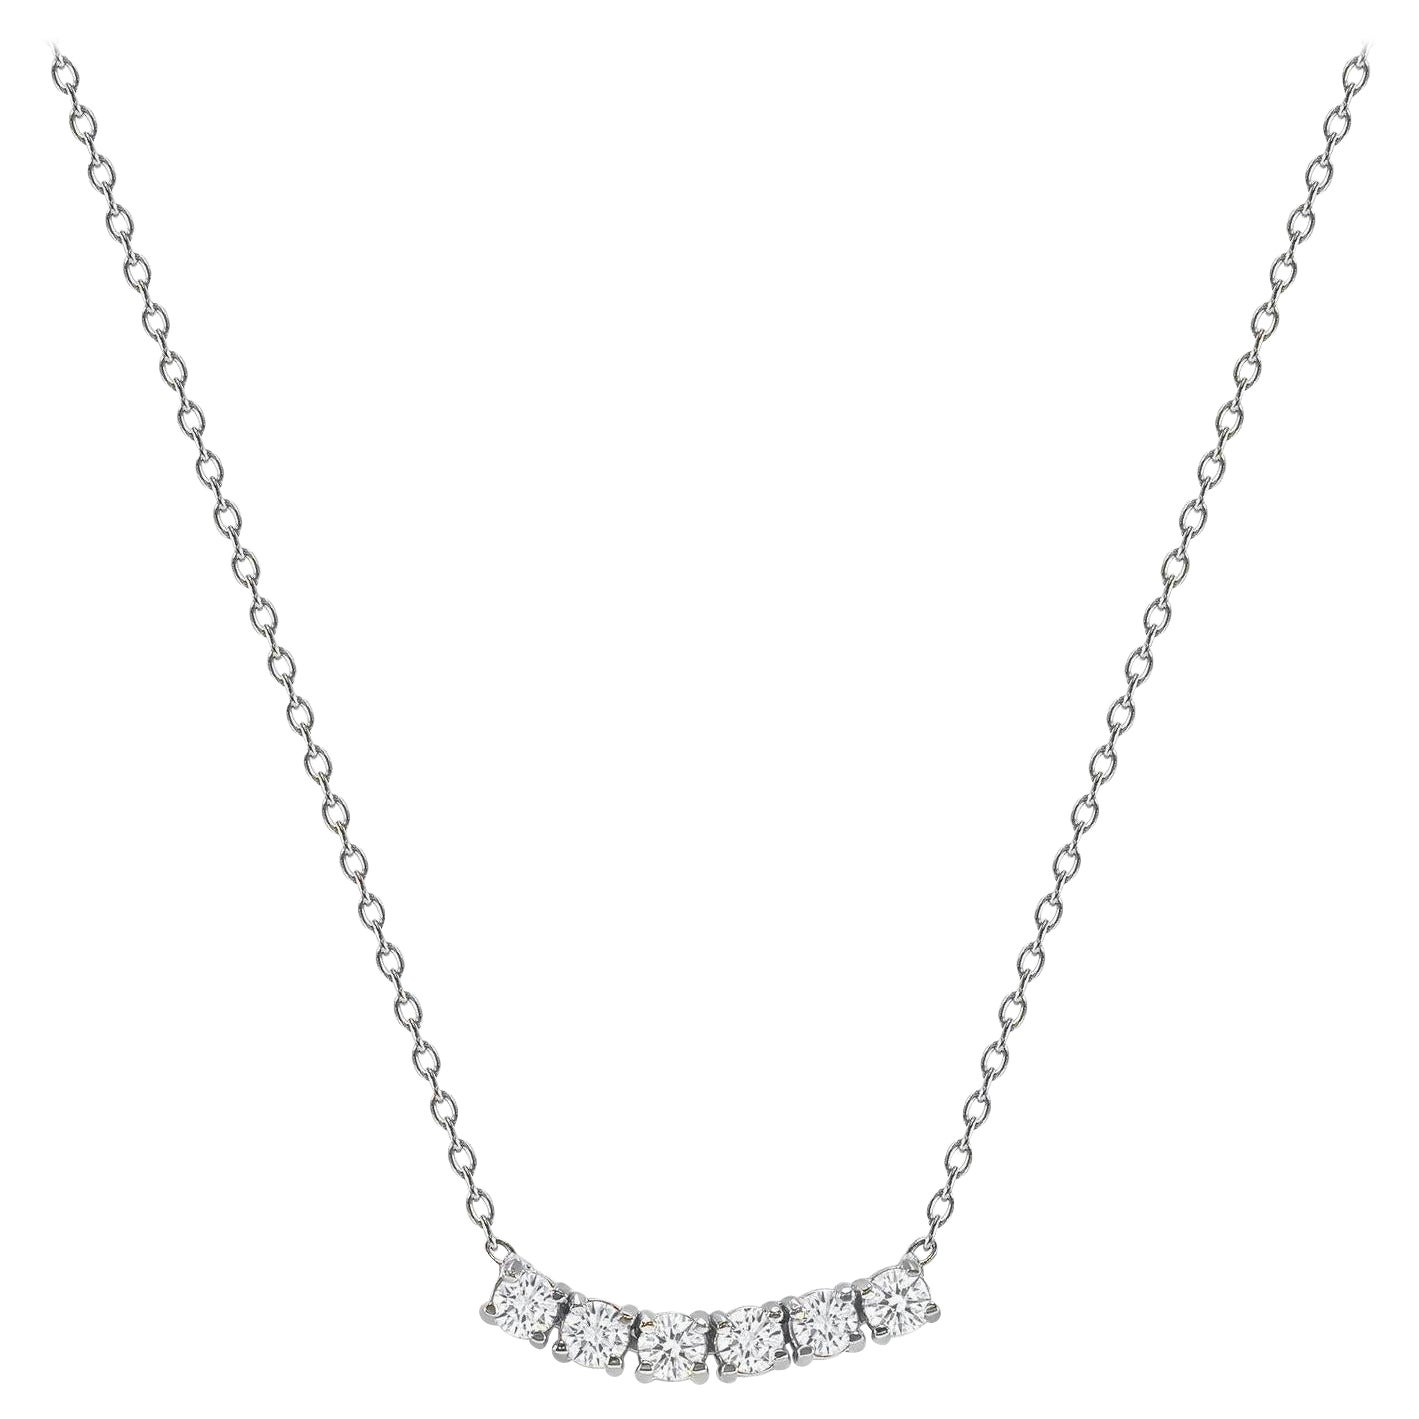 14k White Gold 1.5 Carat Petite Round Diamond Six Stone Curved Necklace